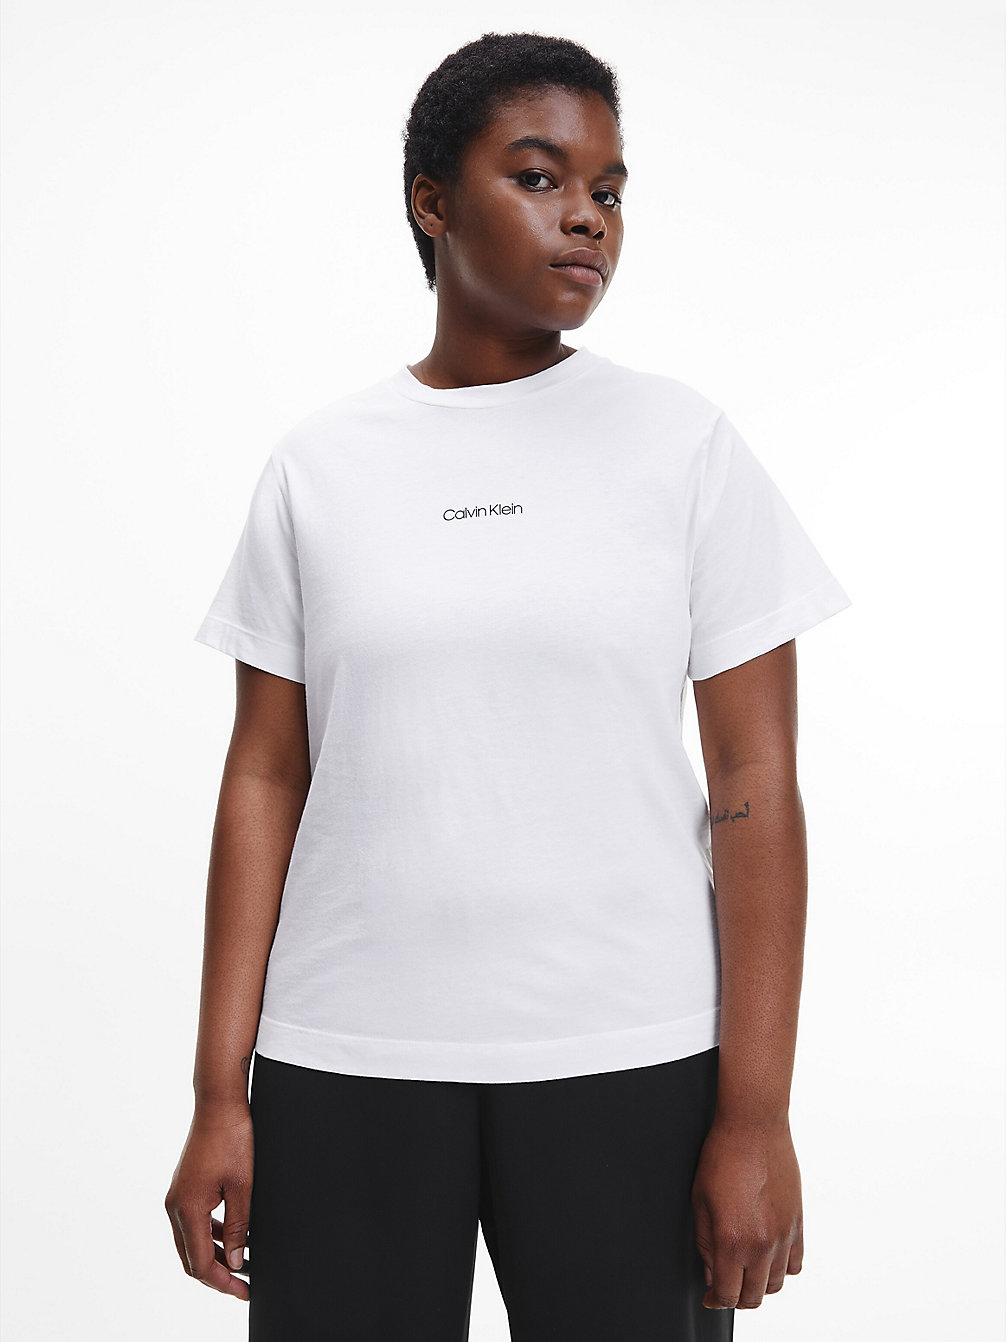 BRIGHT WHITE > Grote Maat T-Shirt Van Biologisch Katoen > undefined dames - Calvin Klein